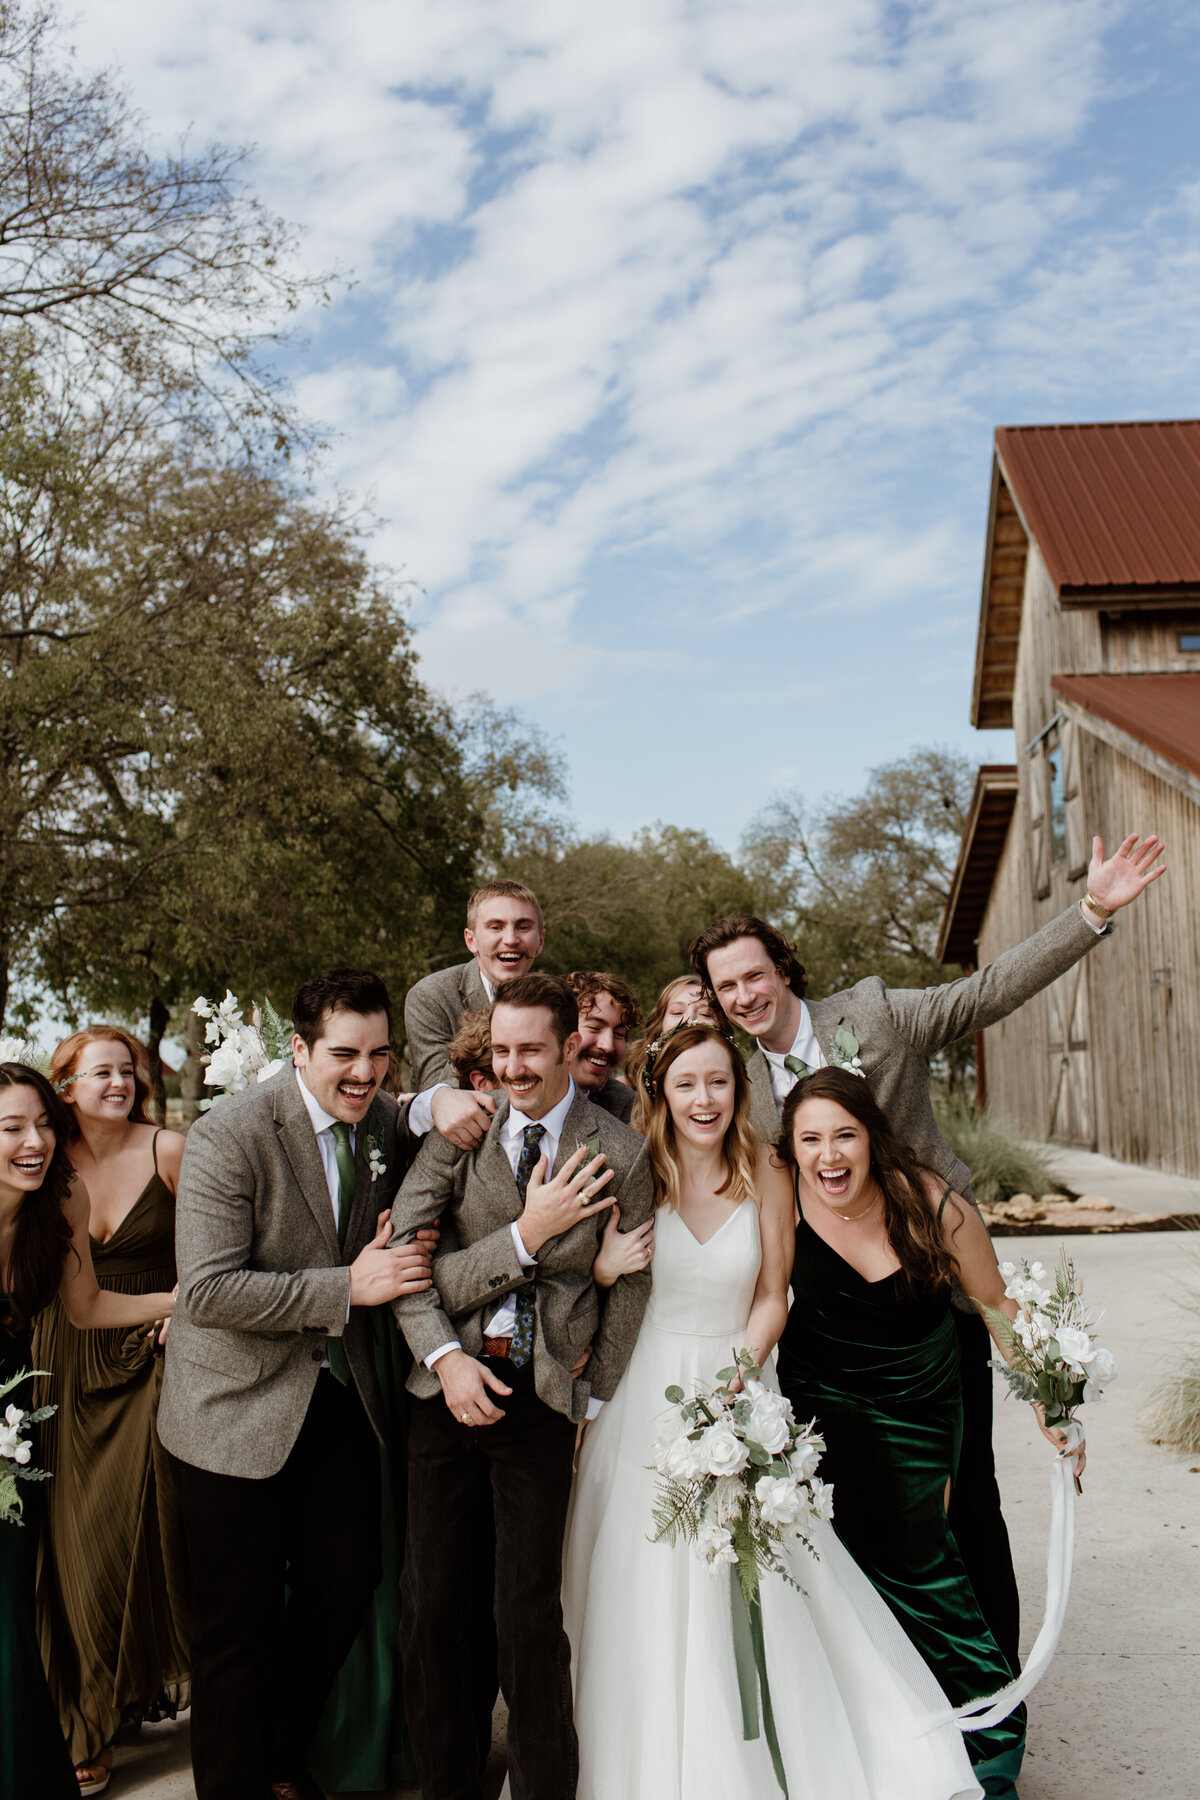 Megan Christine Studio | Fort Worth Wedding Photographer | Dallas Wedding Photographer